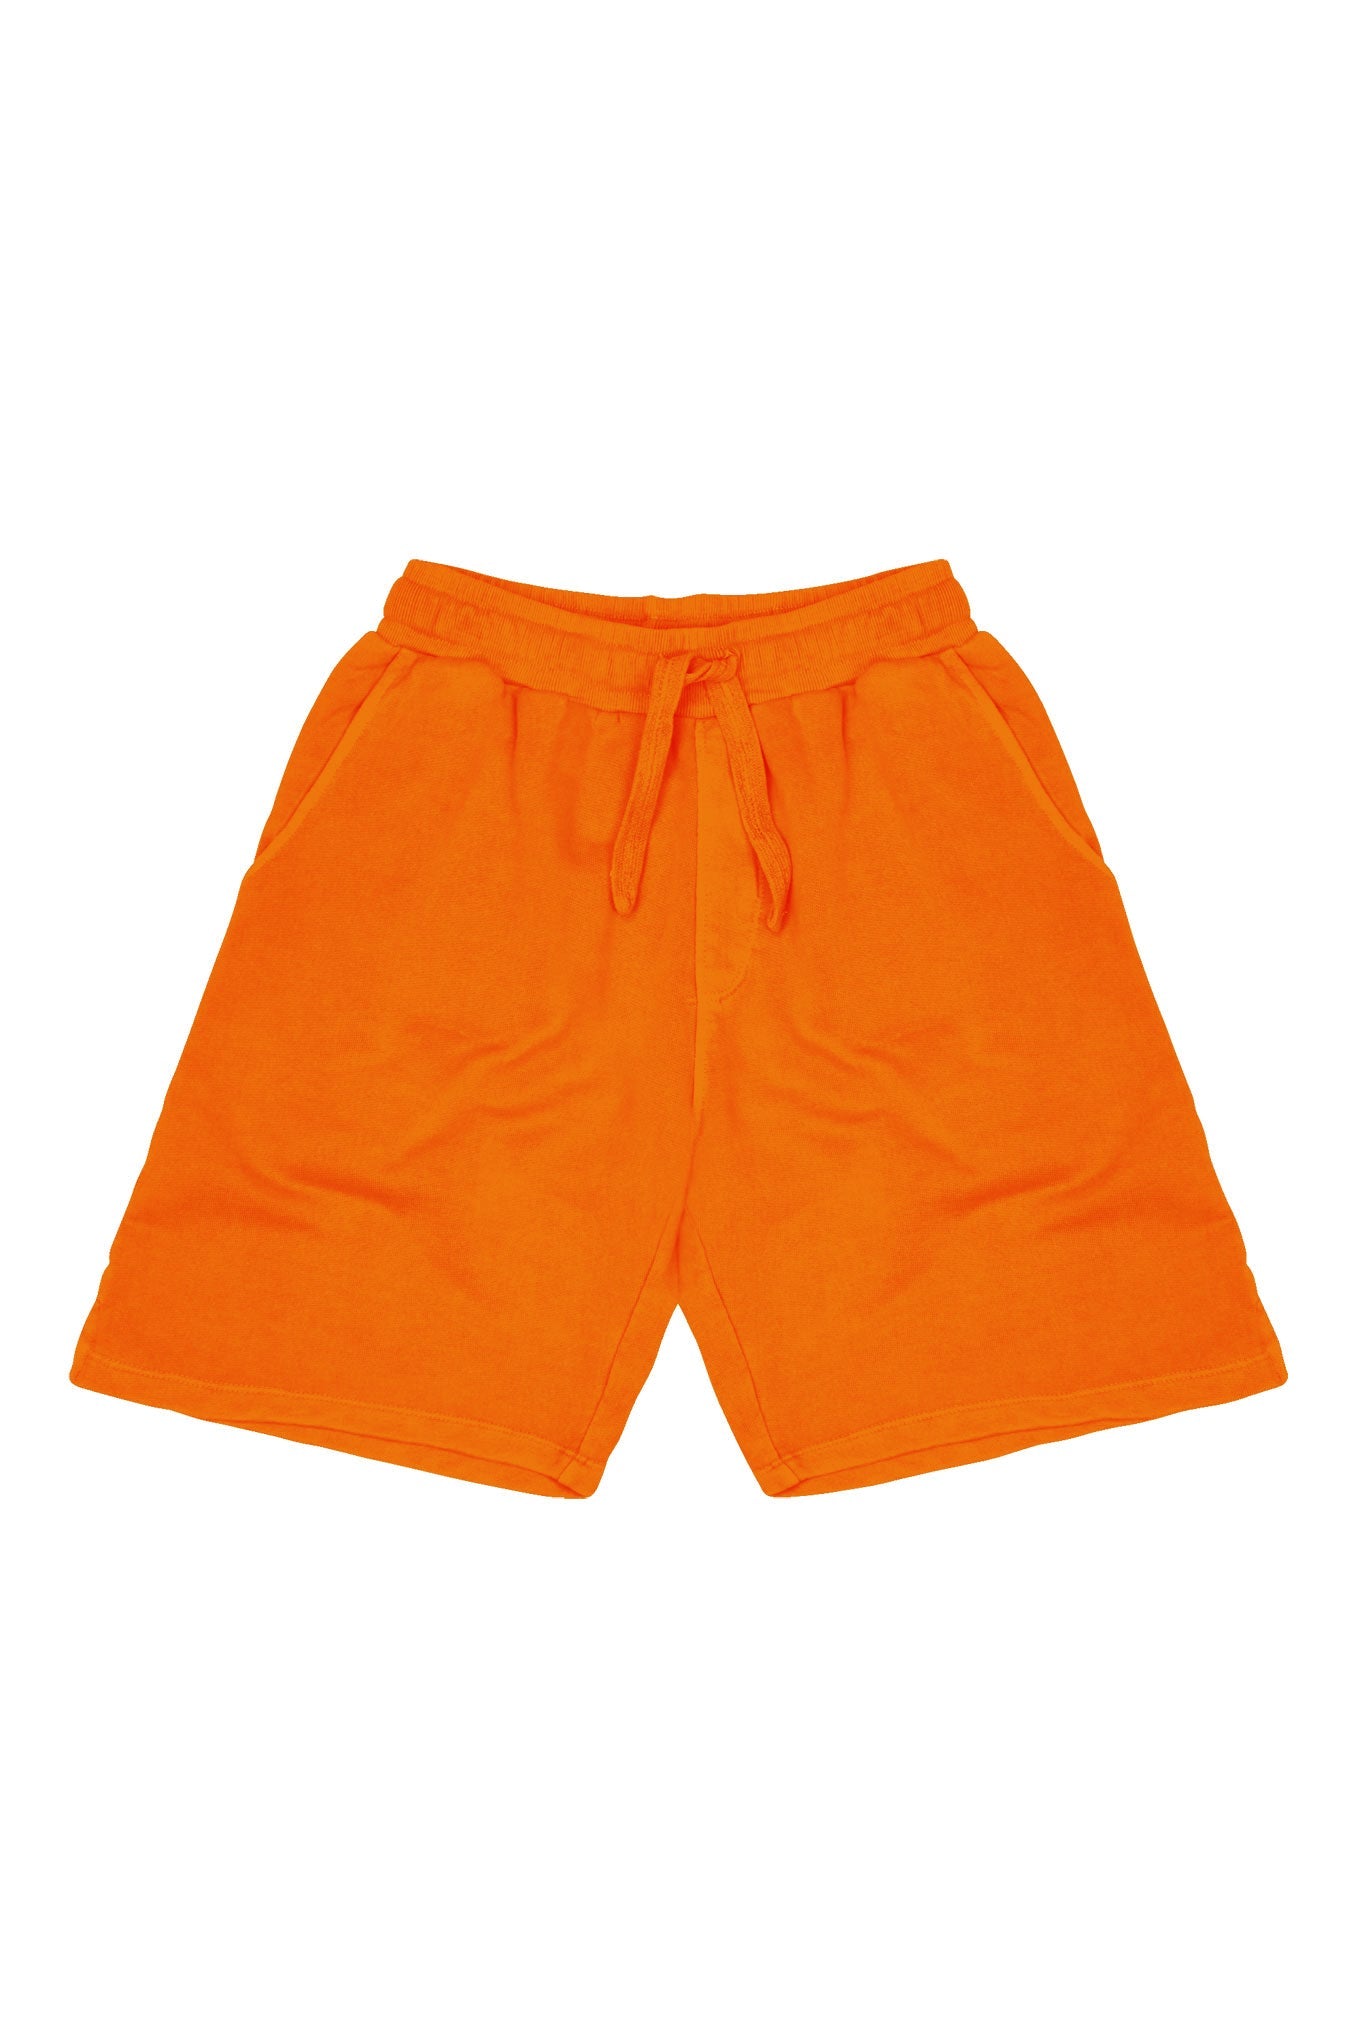 Trousers - FLIP - GOTS Organic Cotton Short Orange